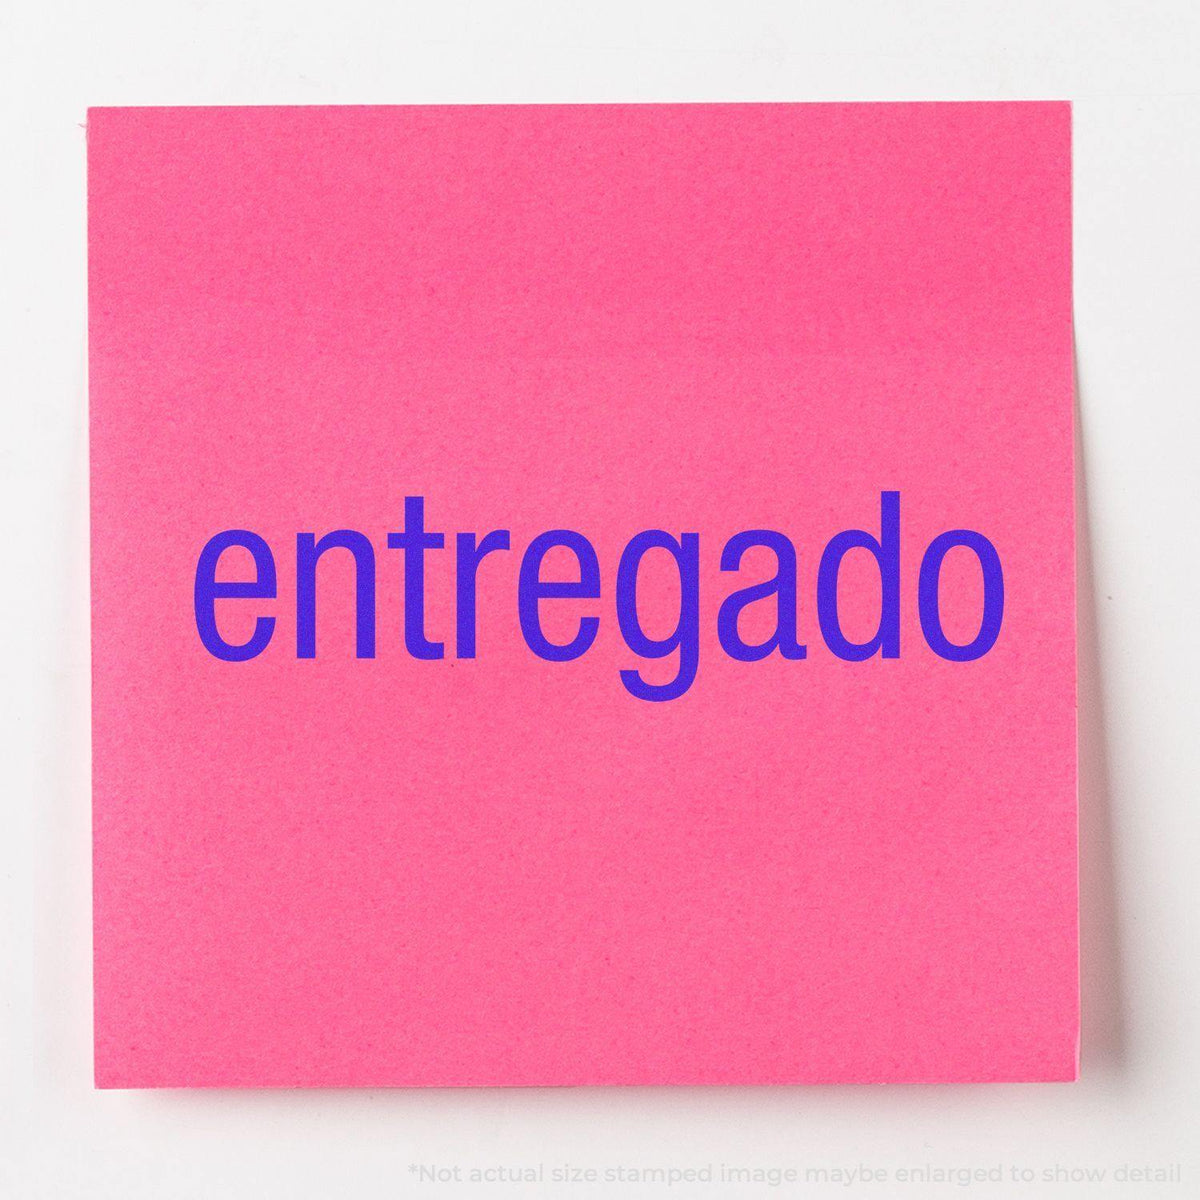 In Use Entregado Rubber Stamp Image